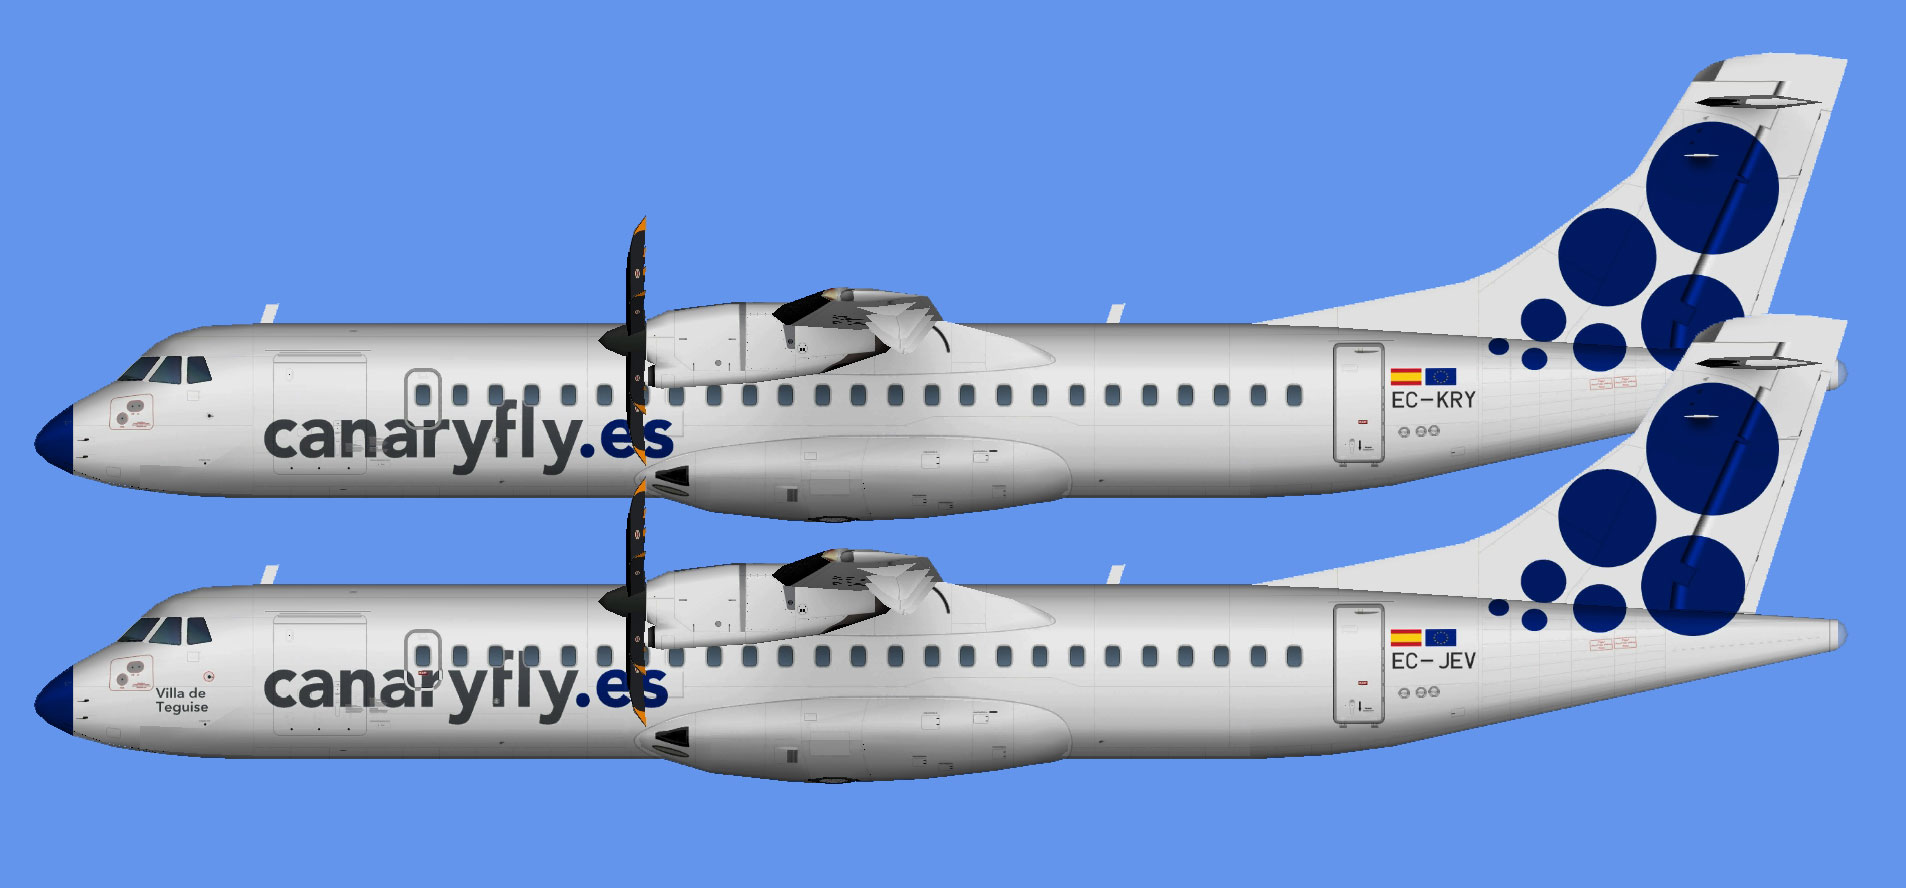 Canaryfly ATR 72 fleet (2018)